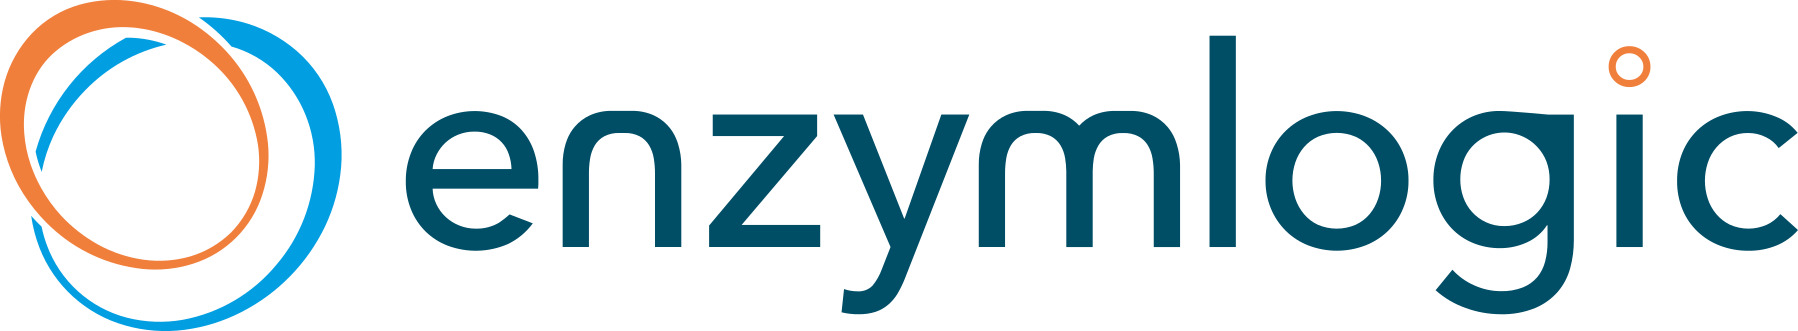 Enzymlogic company logo